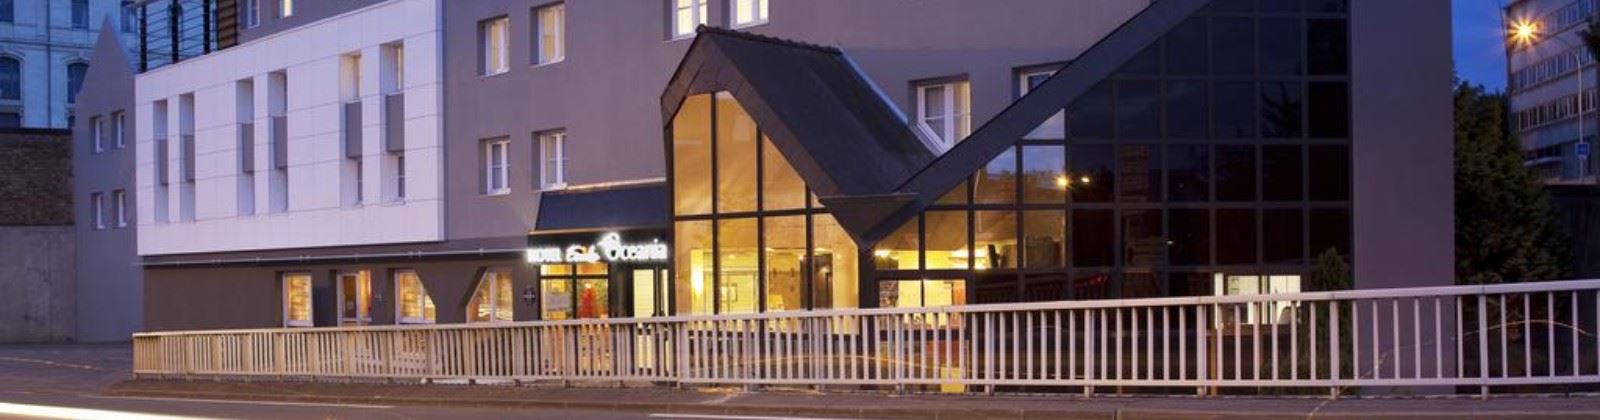 OLEVENE Image - escale-oceania-vannes-olevene-hotel-restaurant-meeting-booking-